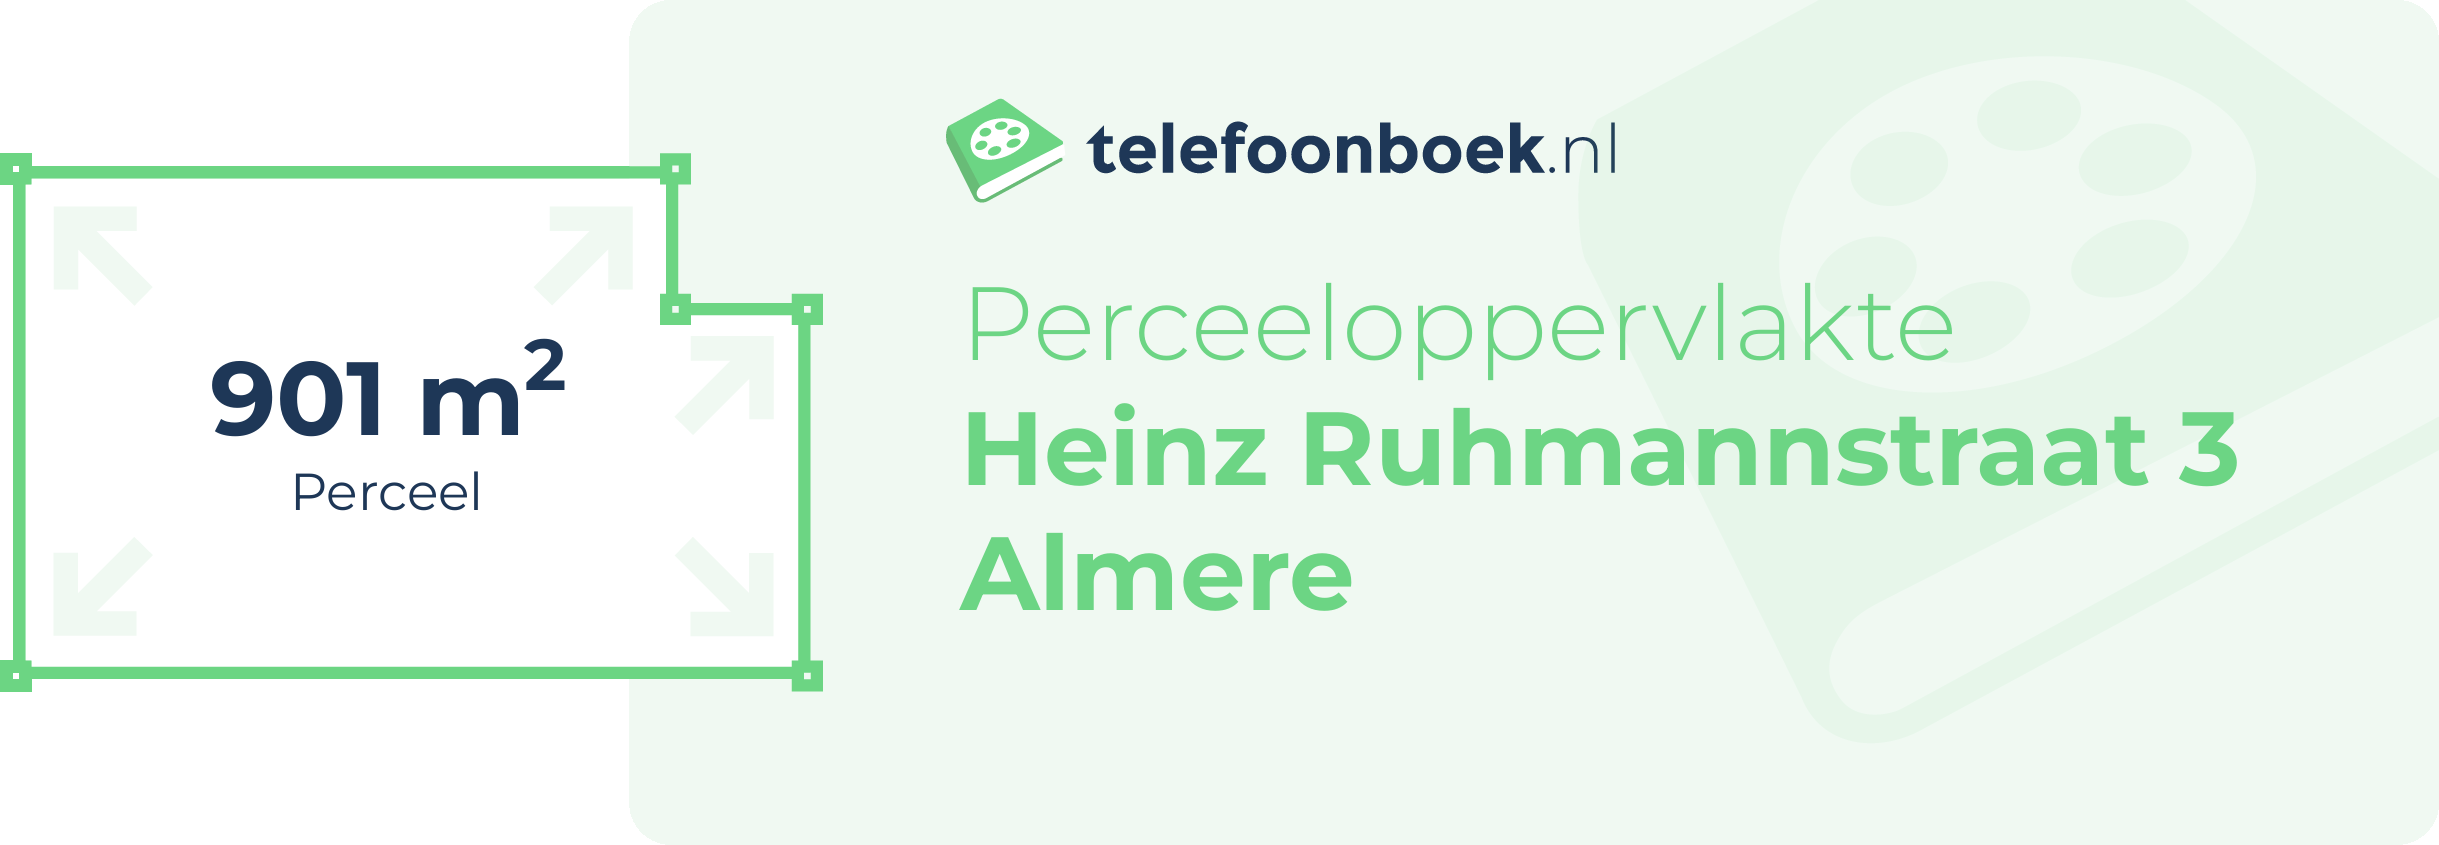 Perceeloppervlakte Heinz Ruhmannstraat 3 Almere